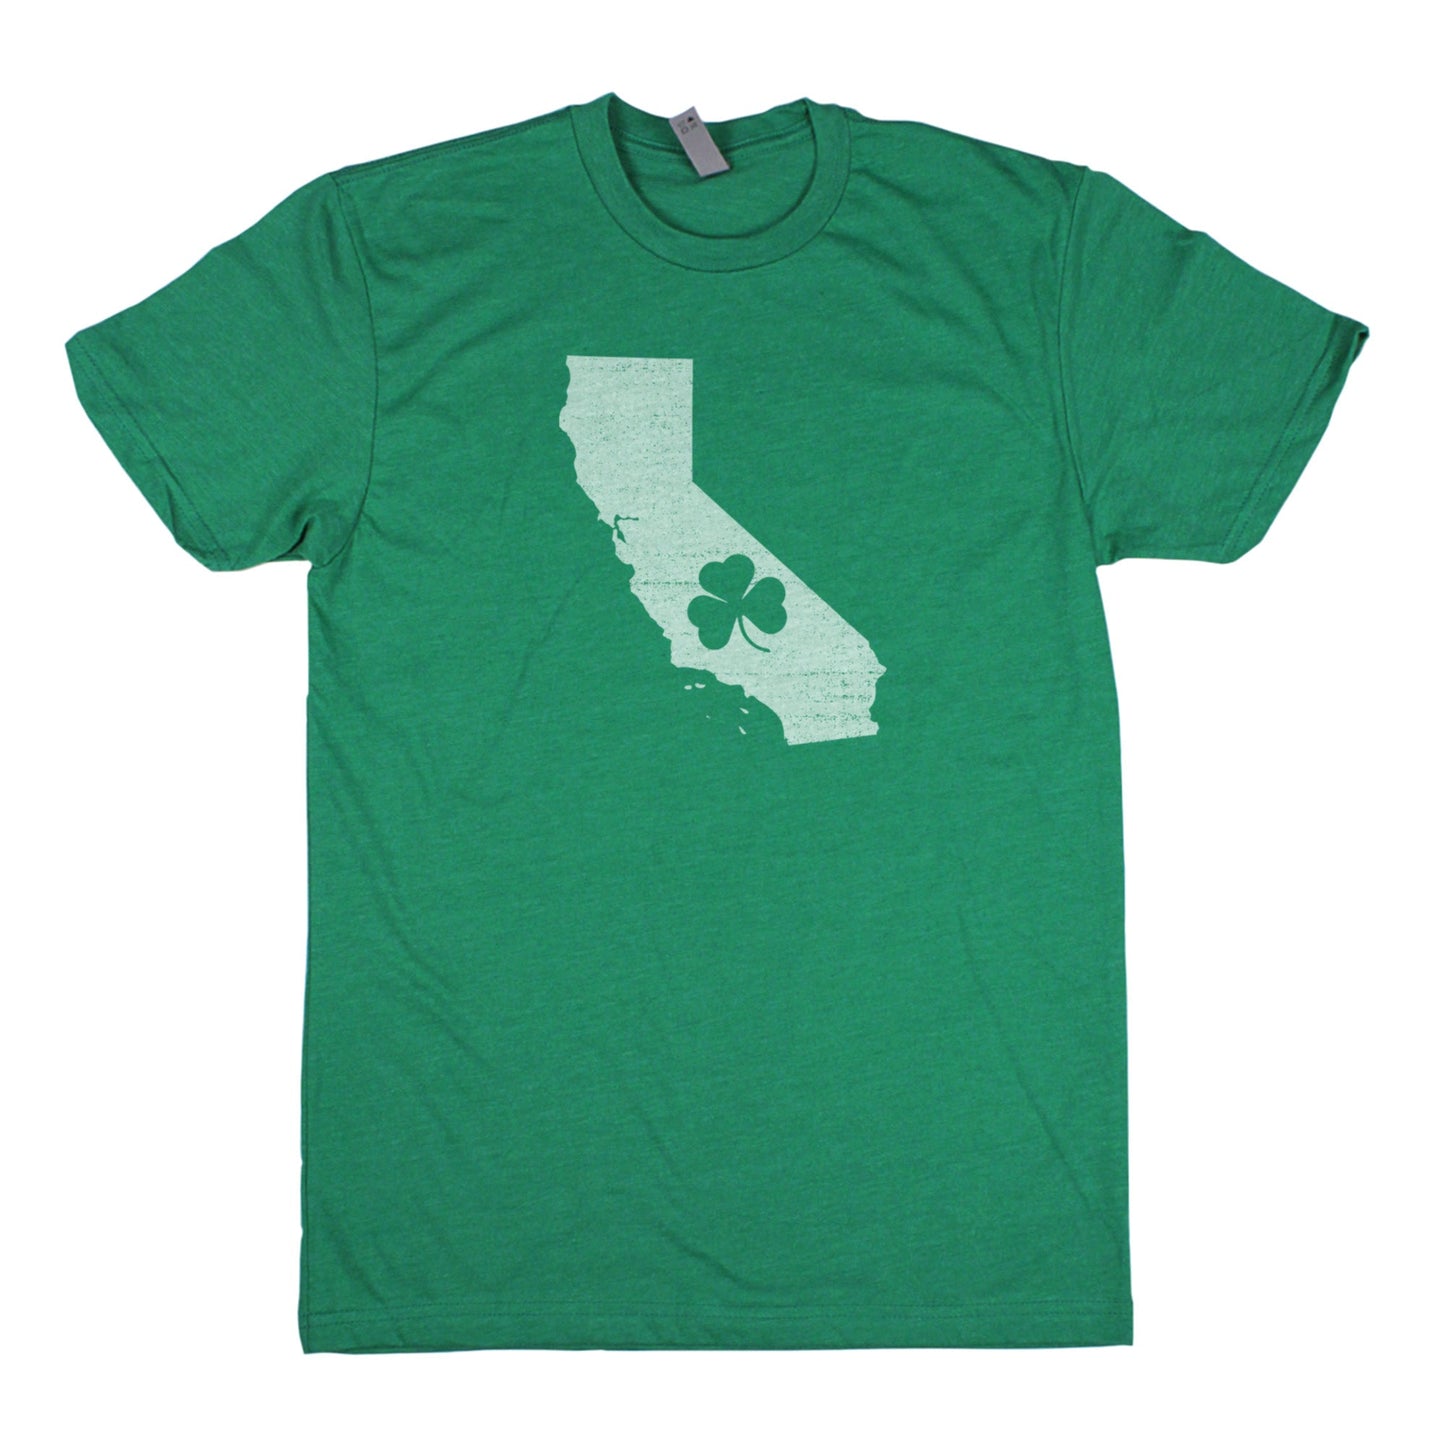 Shamrock Men's Unisex T-Shirt - California